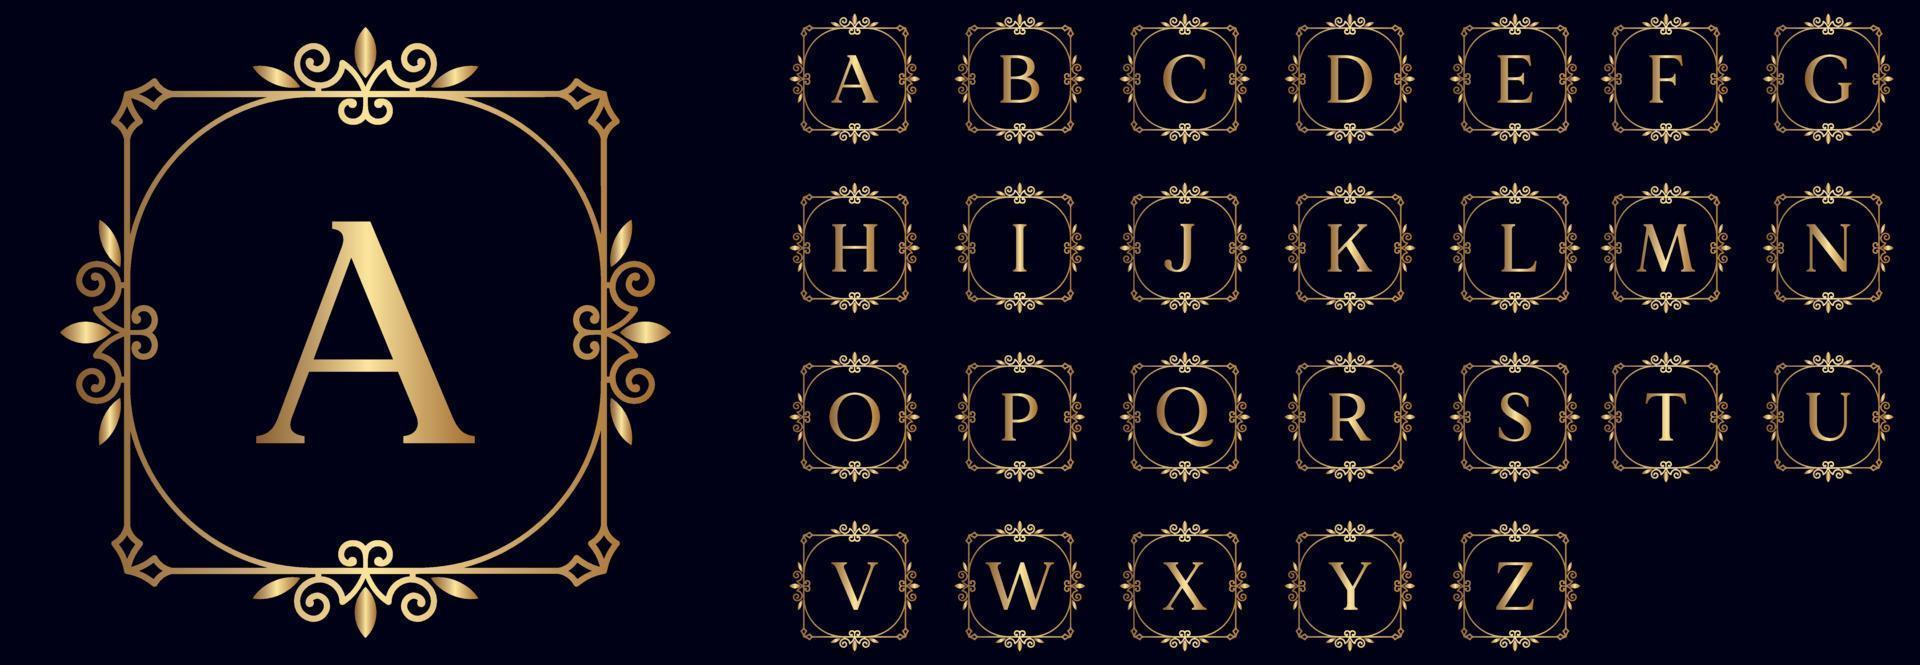 logos de crête héraldique de luxe royal vecteur